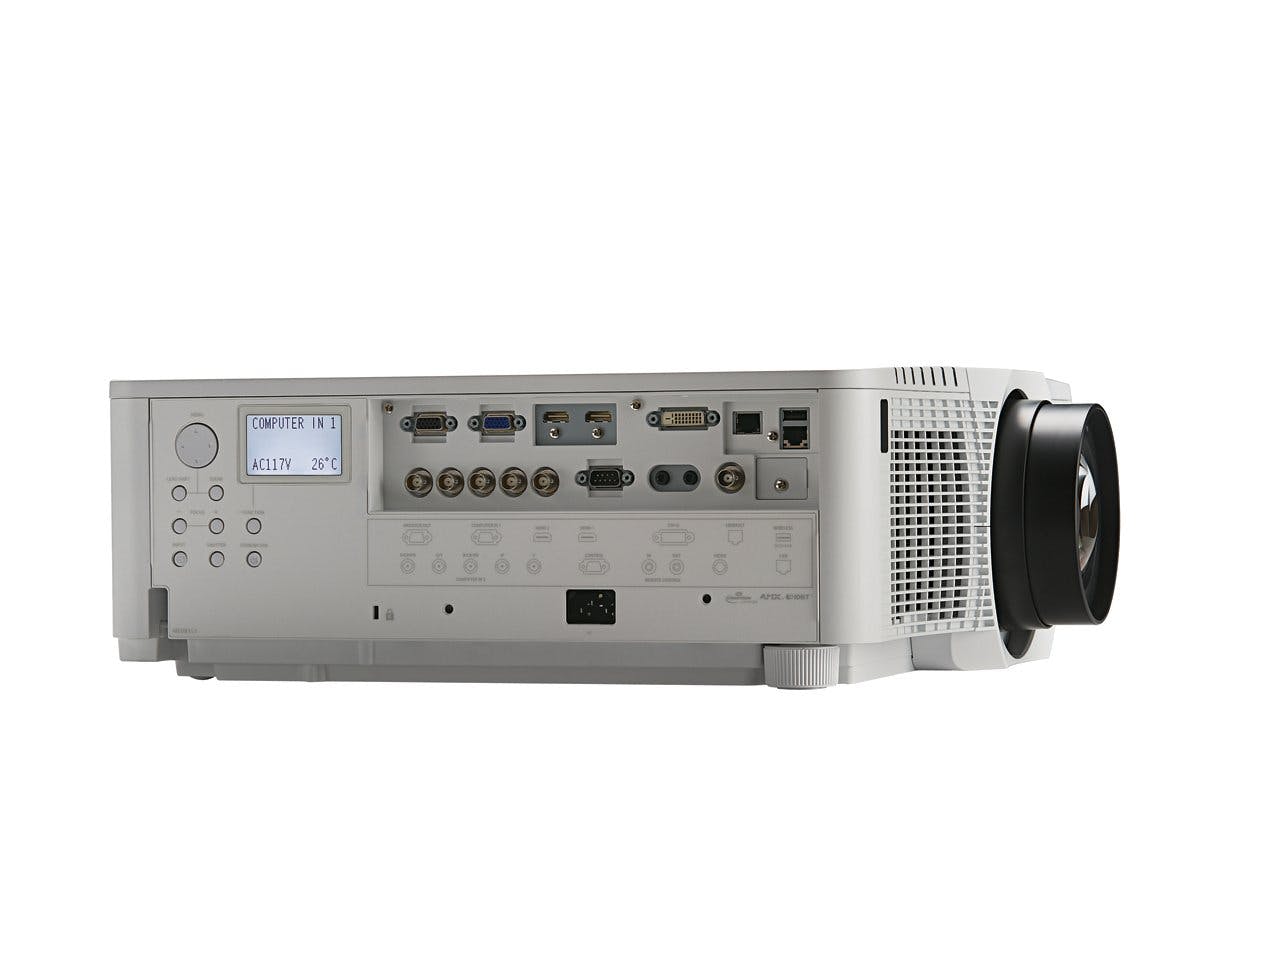 Christie DWU851-Q 1DLP projector | 121-029102-01 (white) | 121-029113-01 (black)